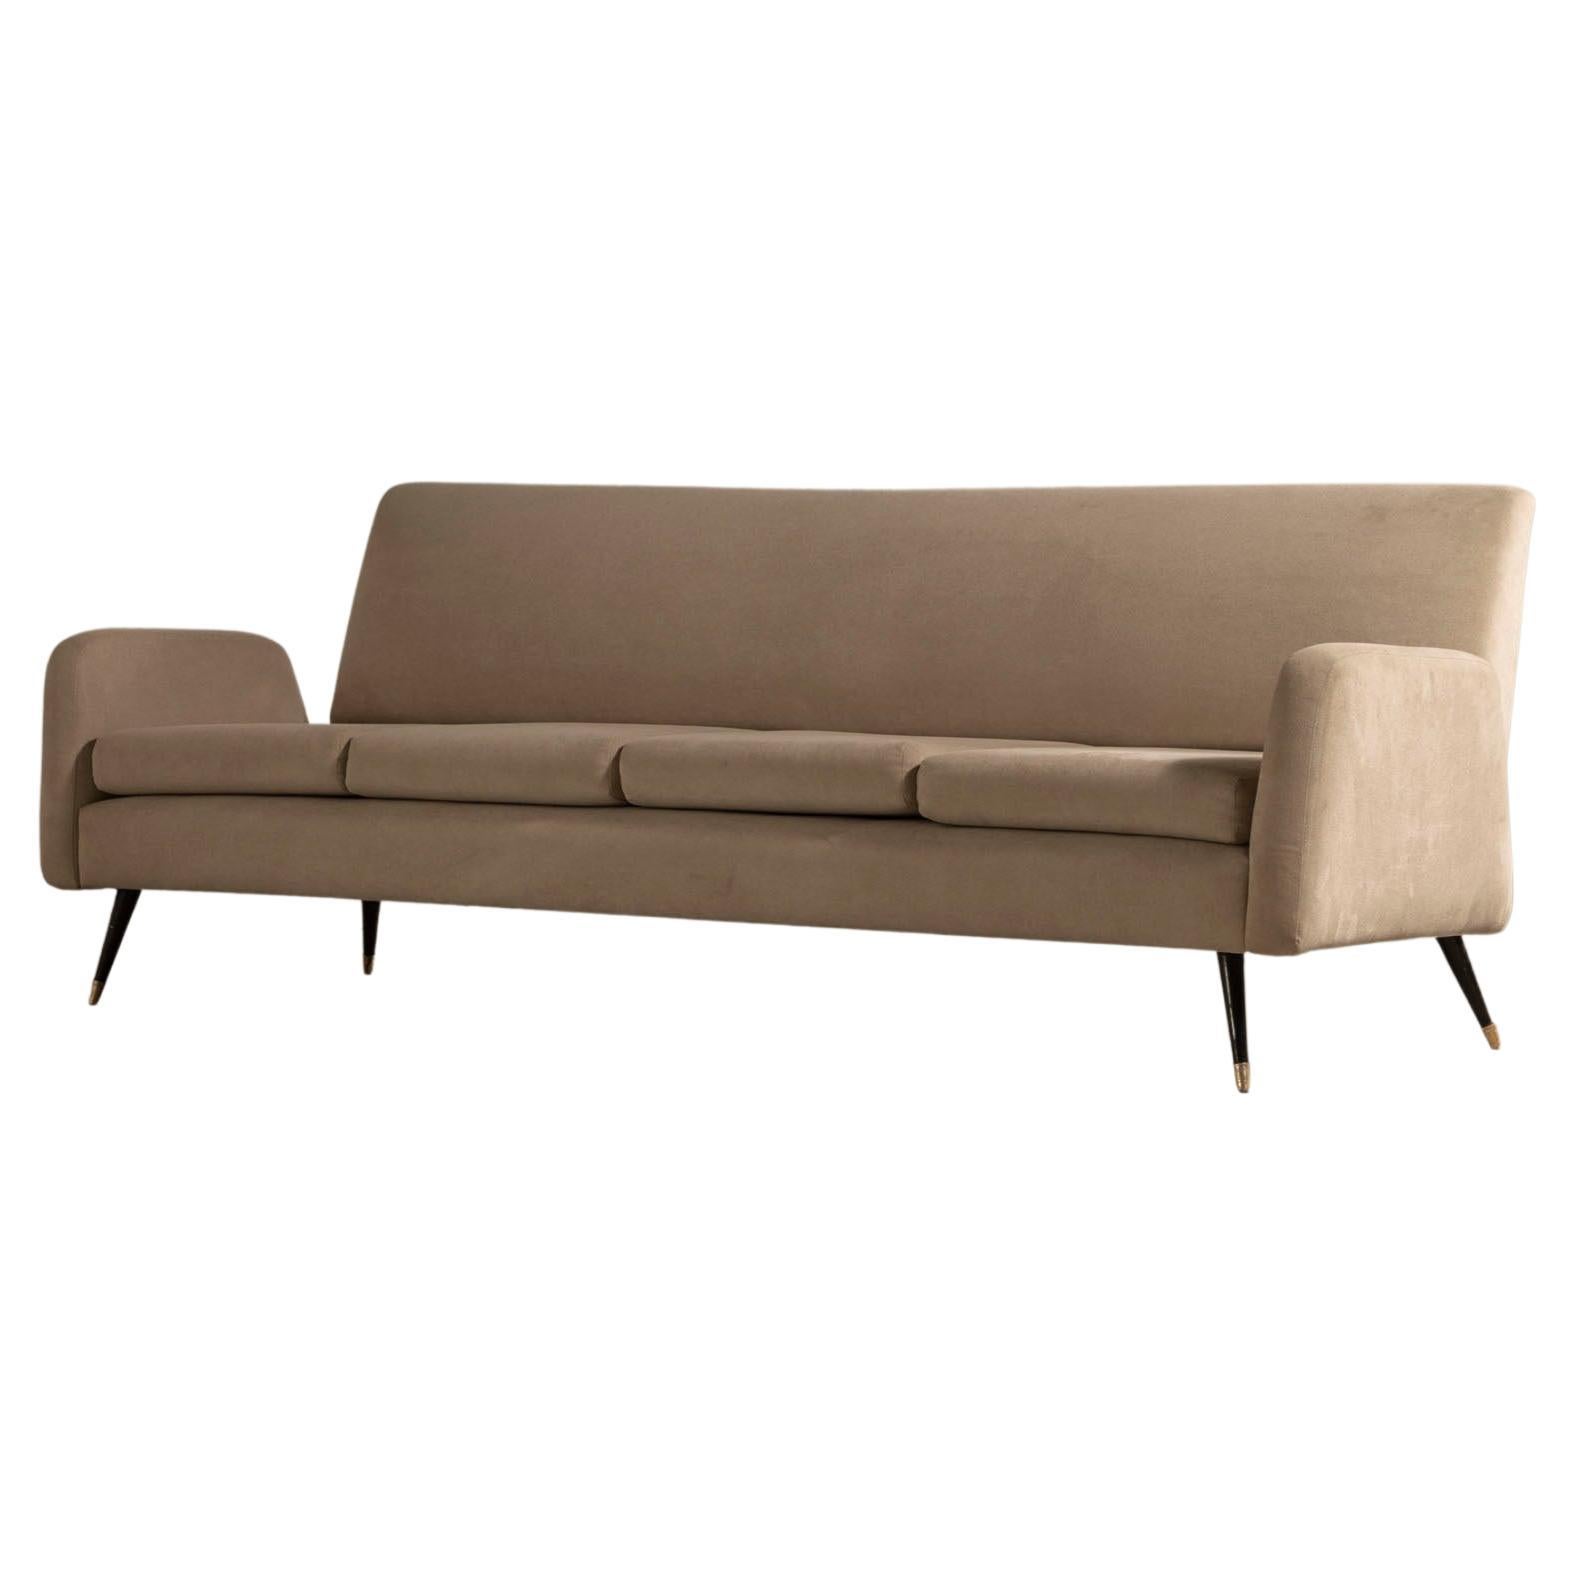 Four-Seater Sofa by Martin Eisler, Brazilian Mid-Century Modern Design